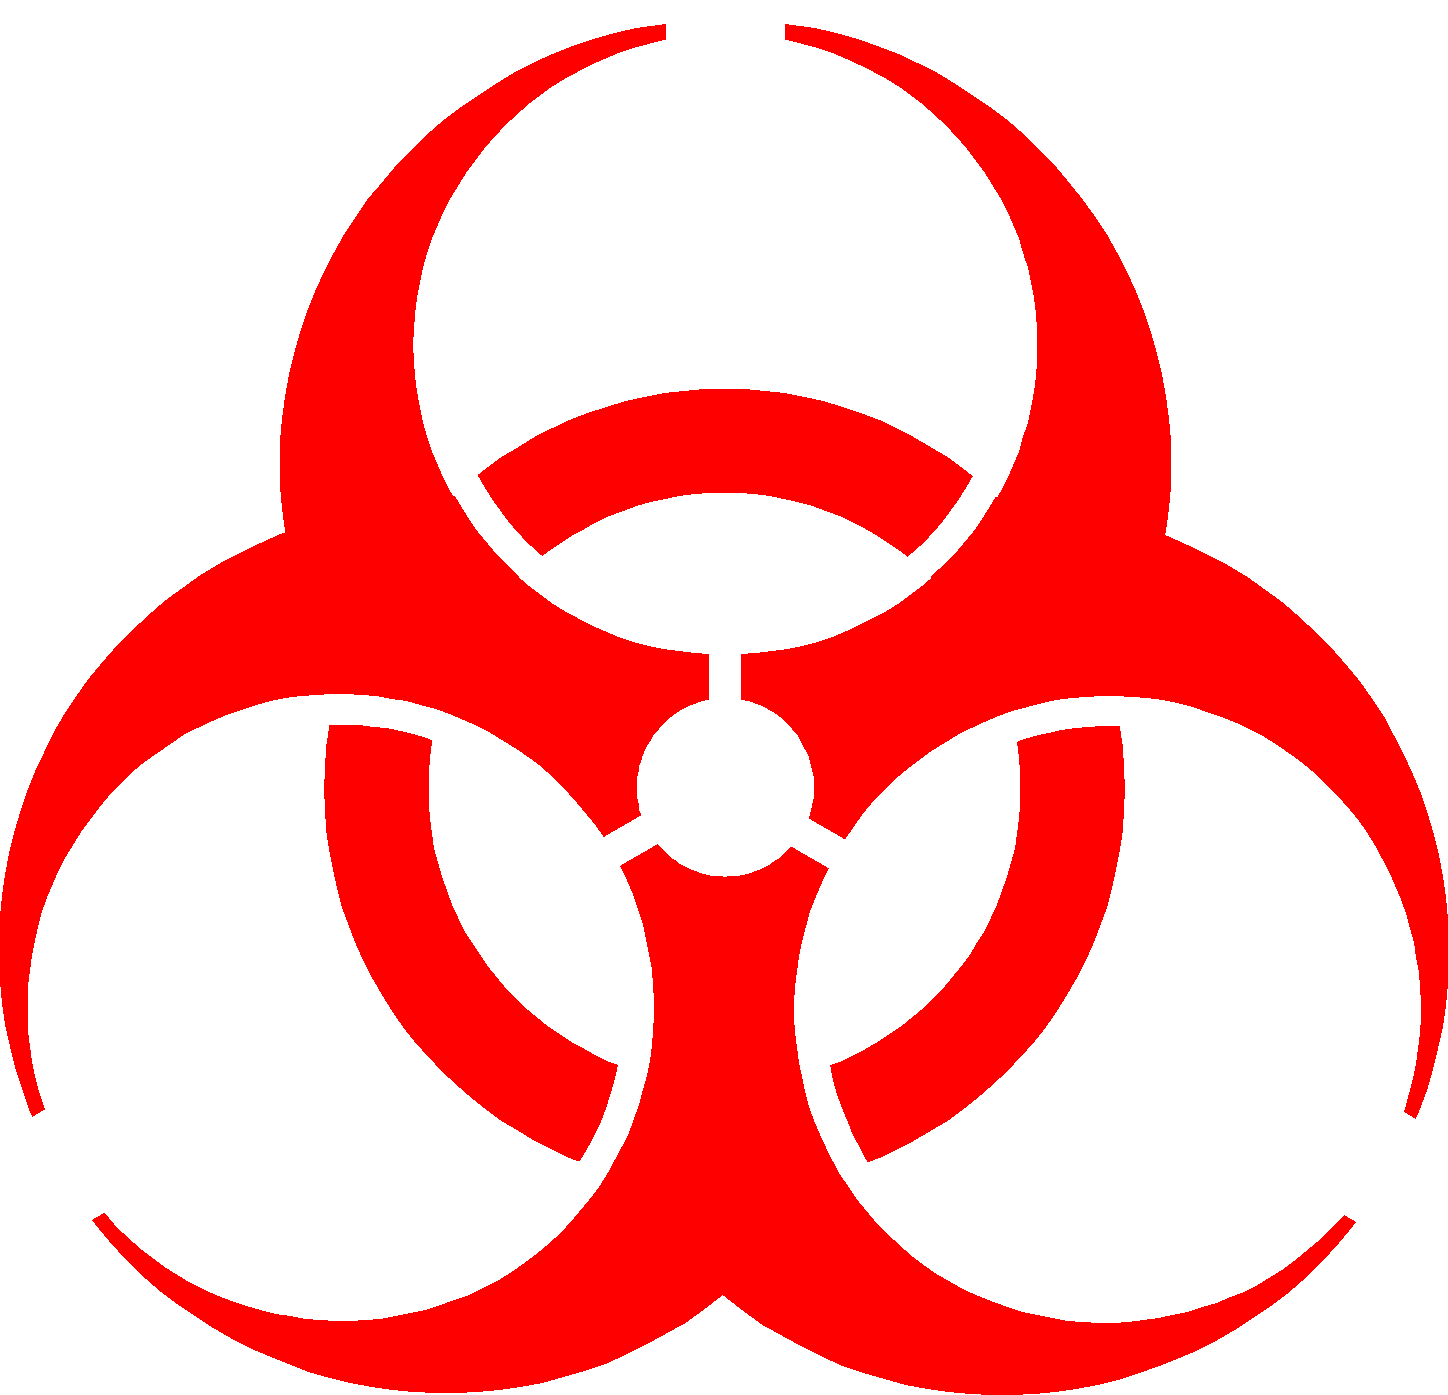 Designing the Biohazard sign | creativebits